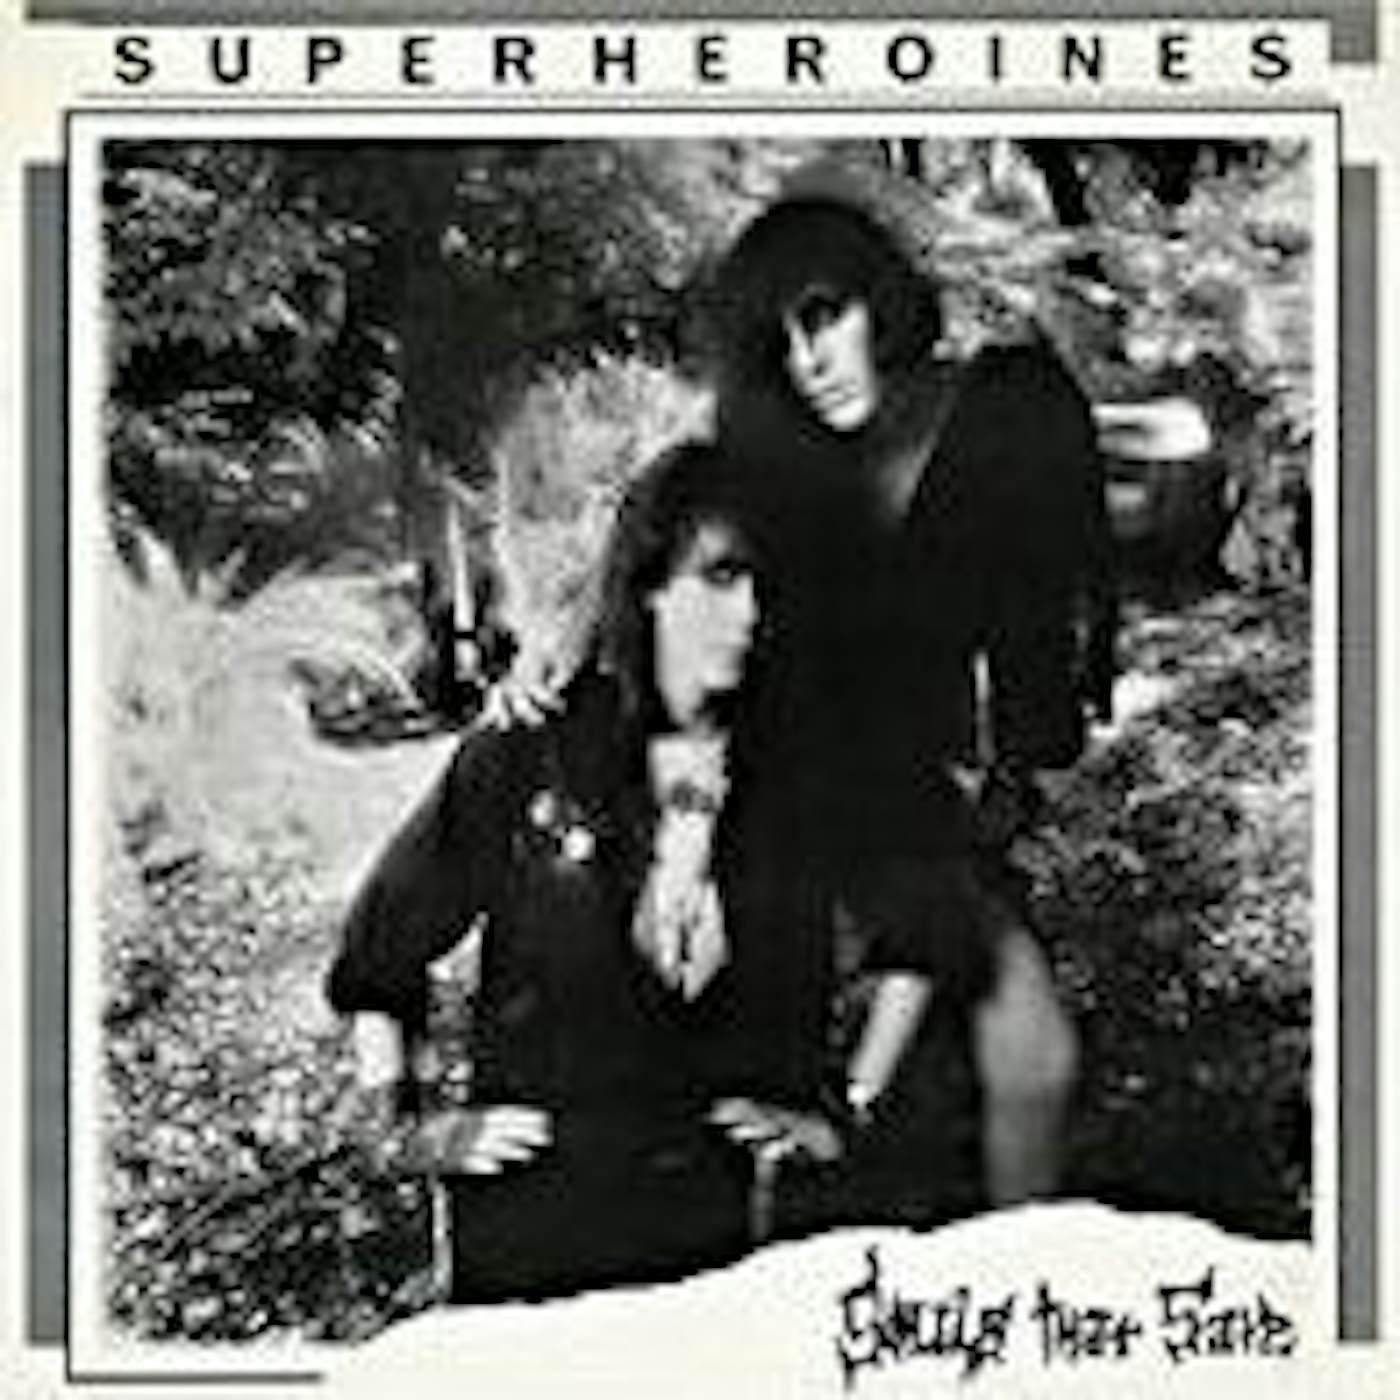 Super Heroines Souls That Save Vinyl Record